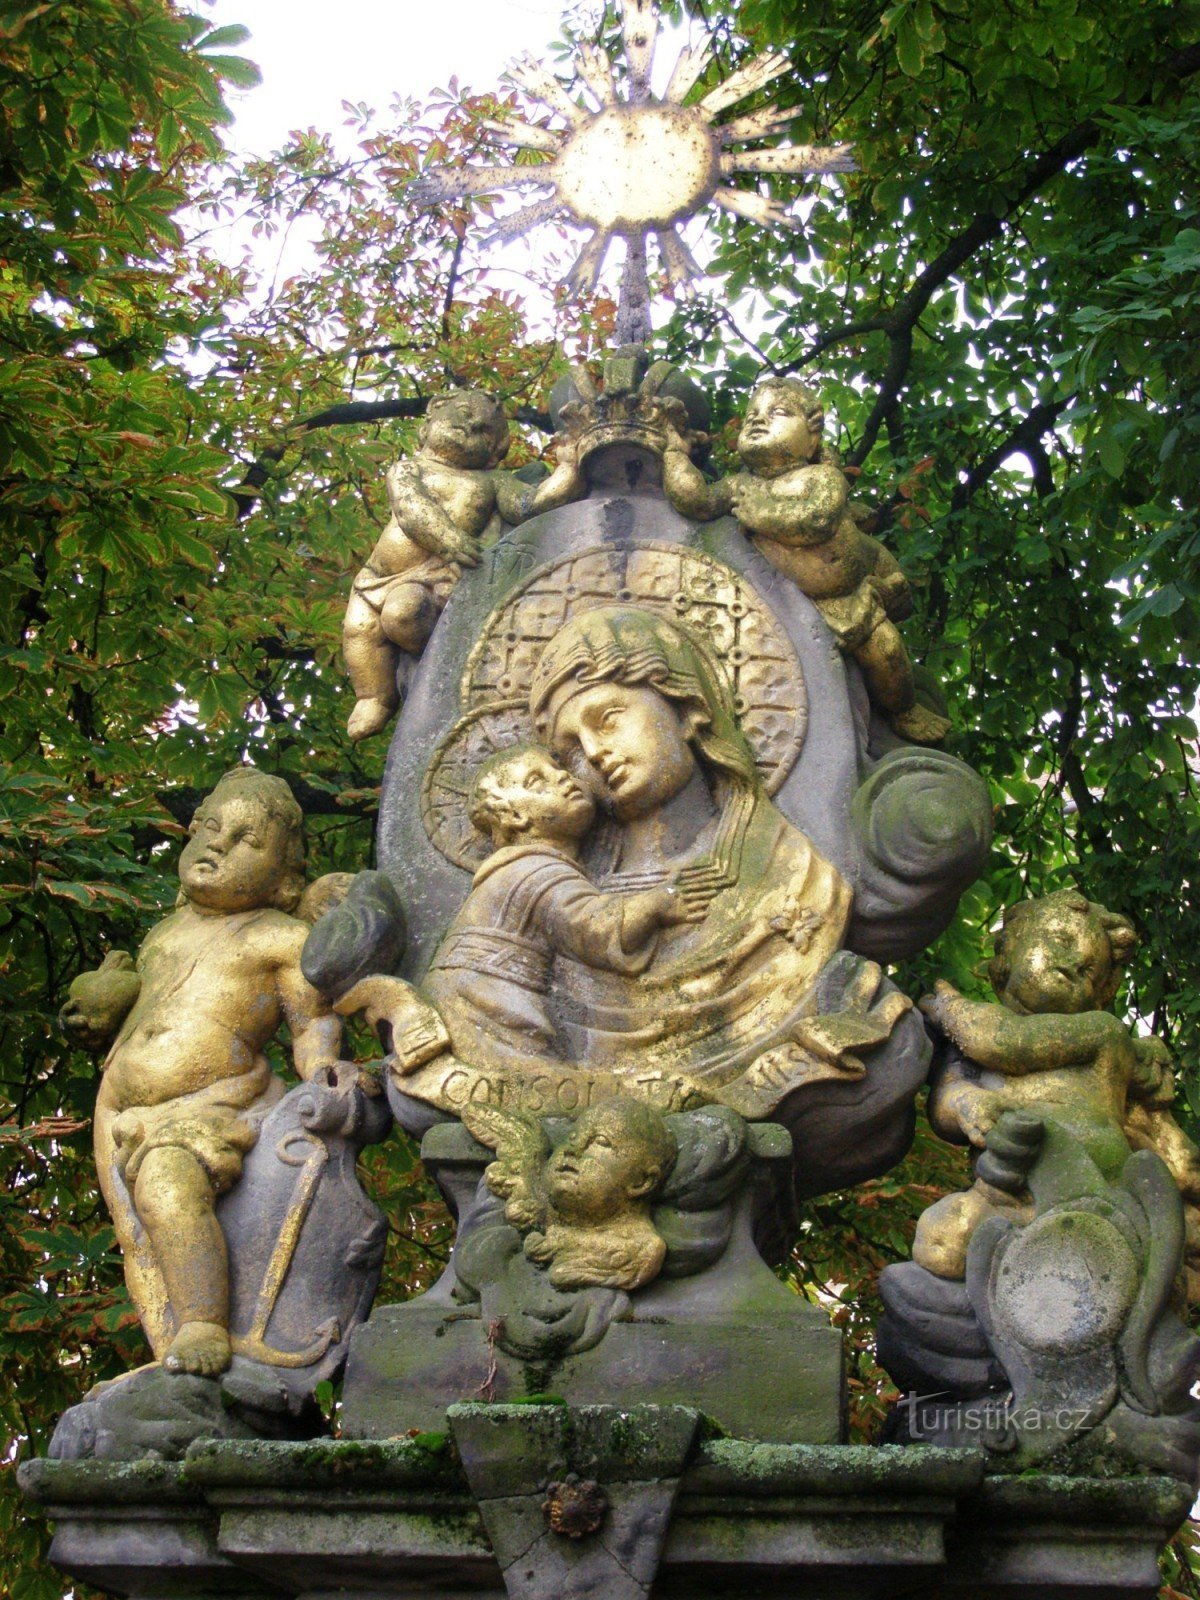 Jičín - statue of Our Lady of Rušanska